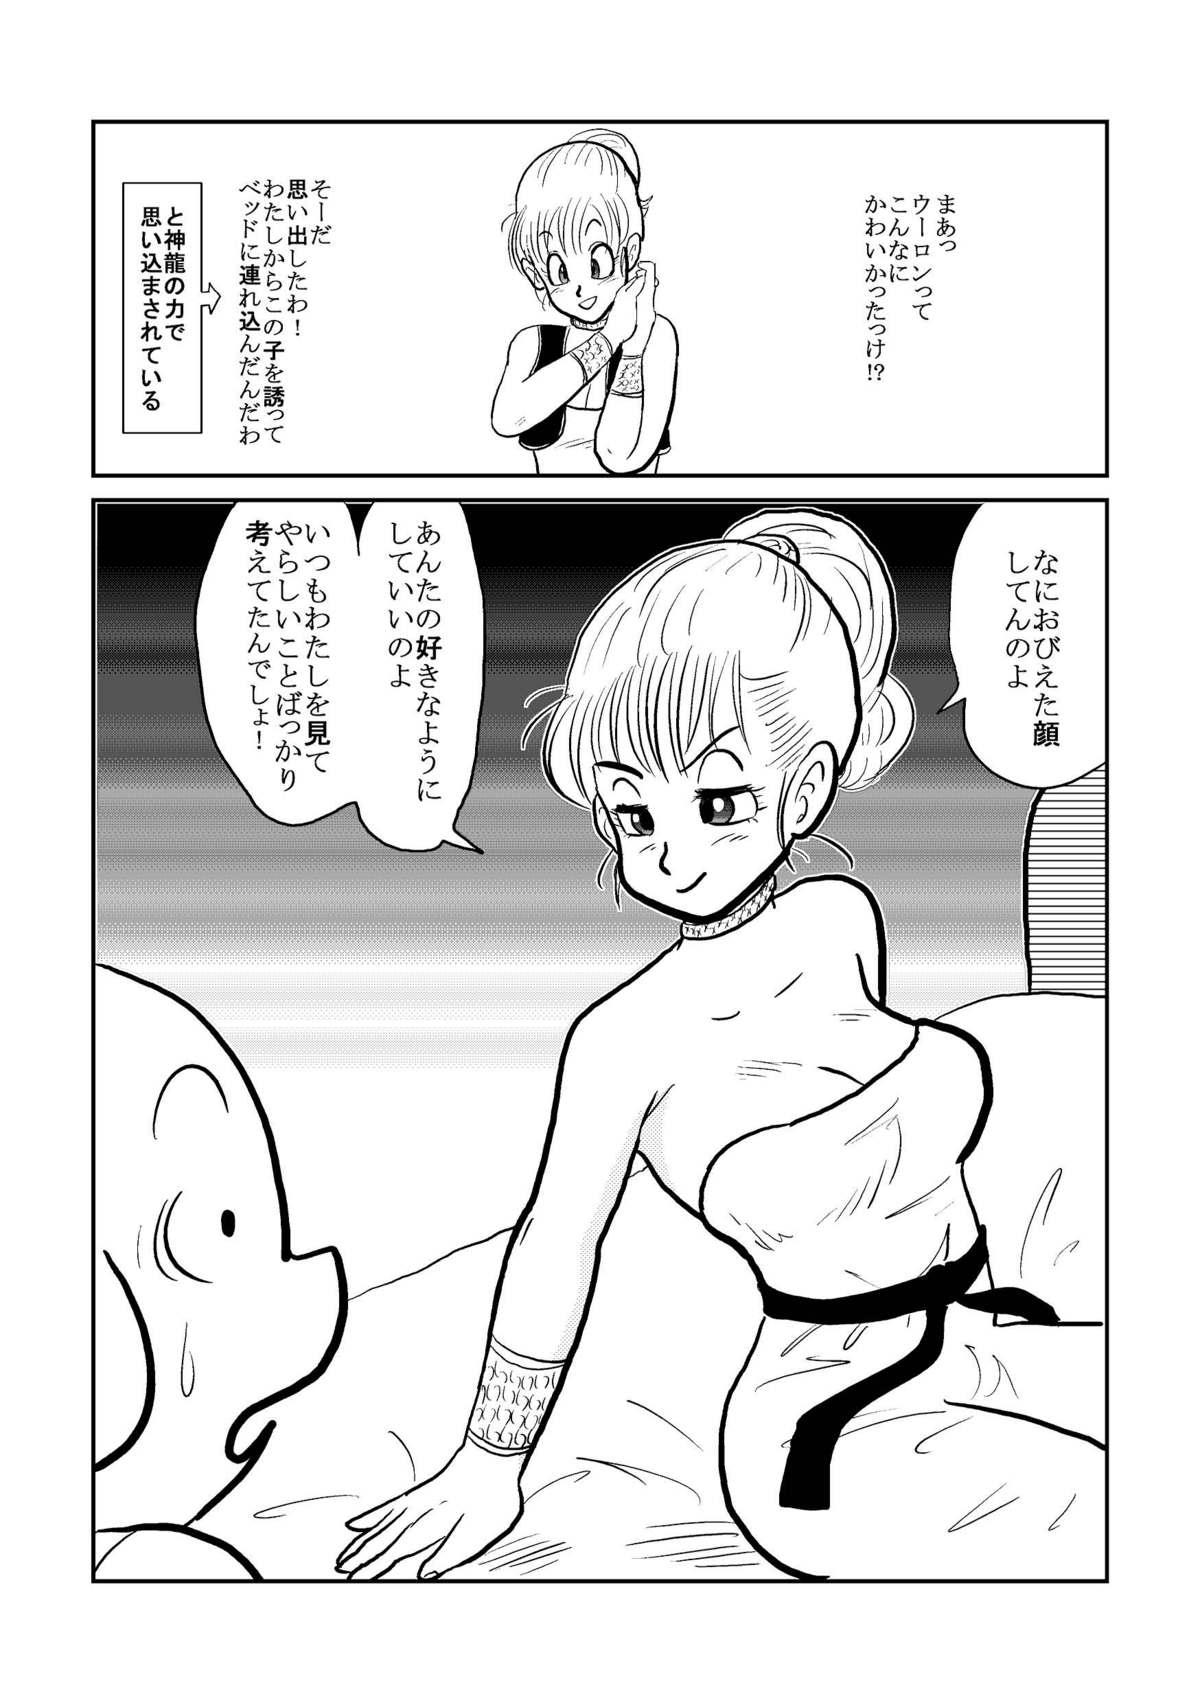 Pervert DB Gaiden - Oolong no Negai no Maki - Dragon ball Aunt - Page 9